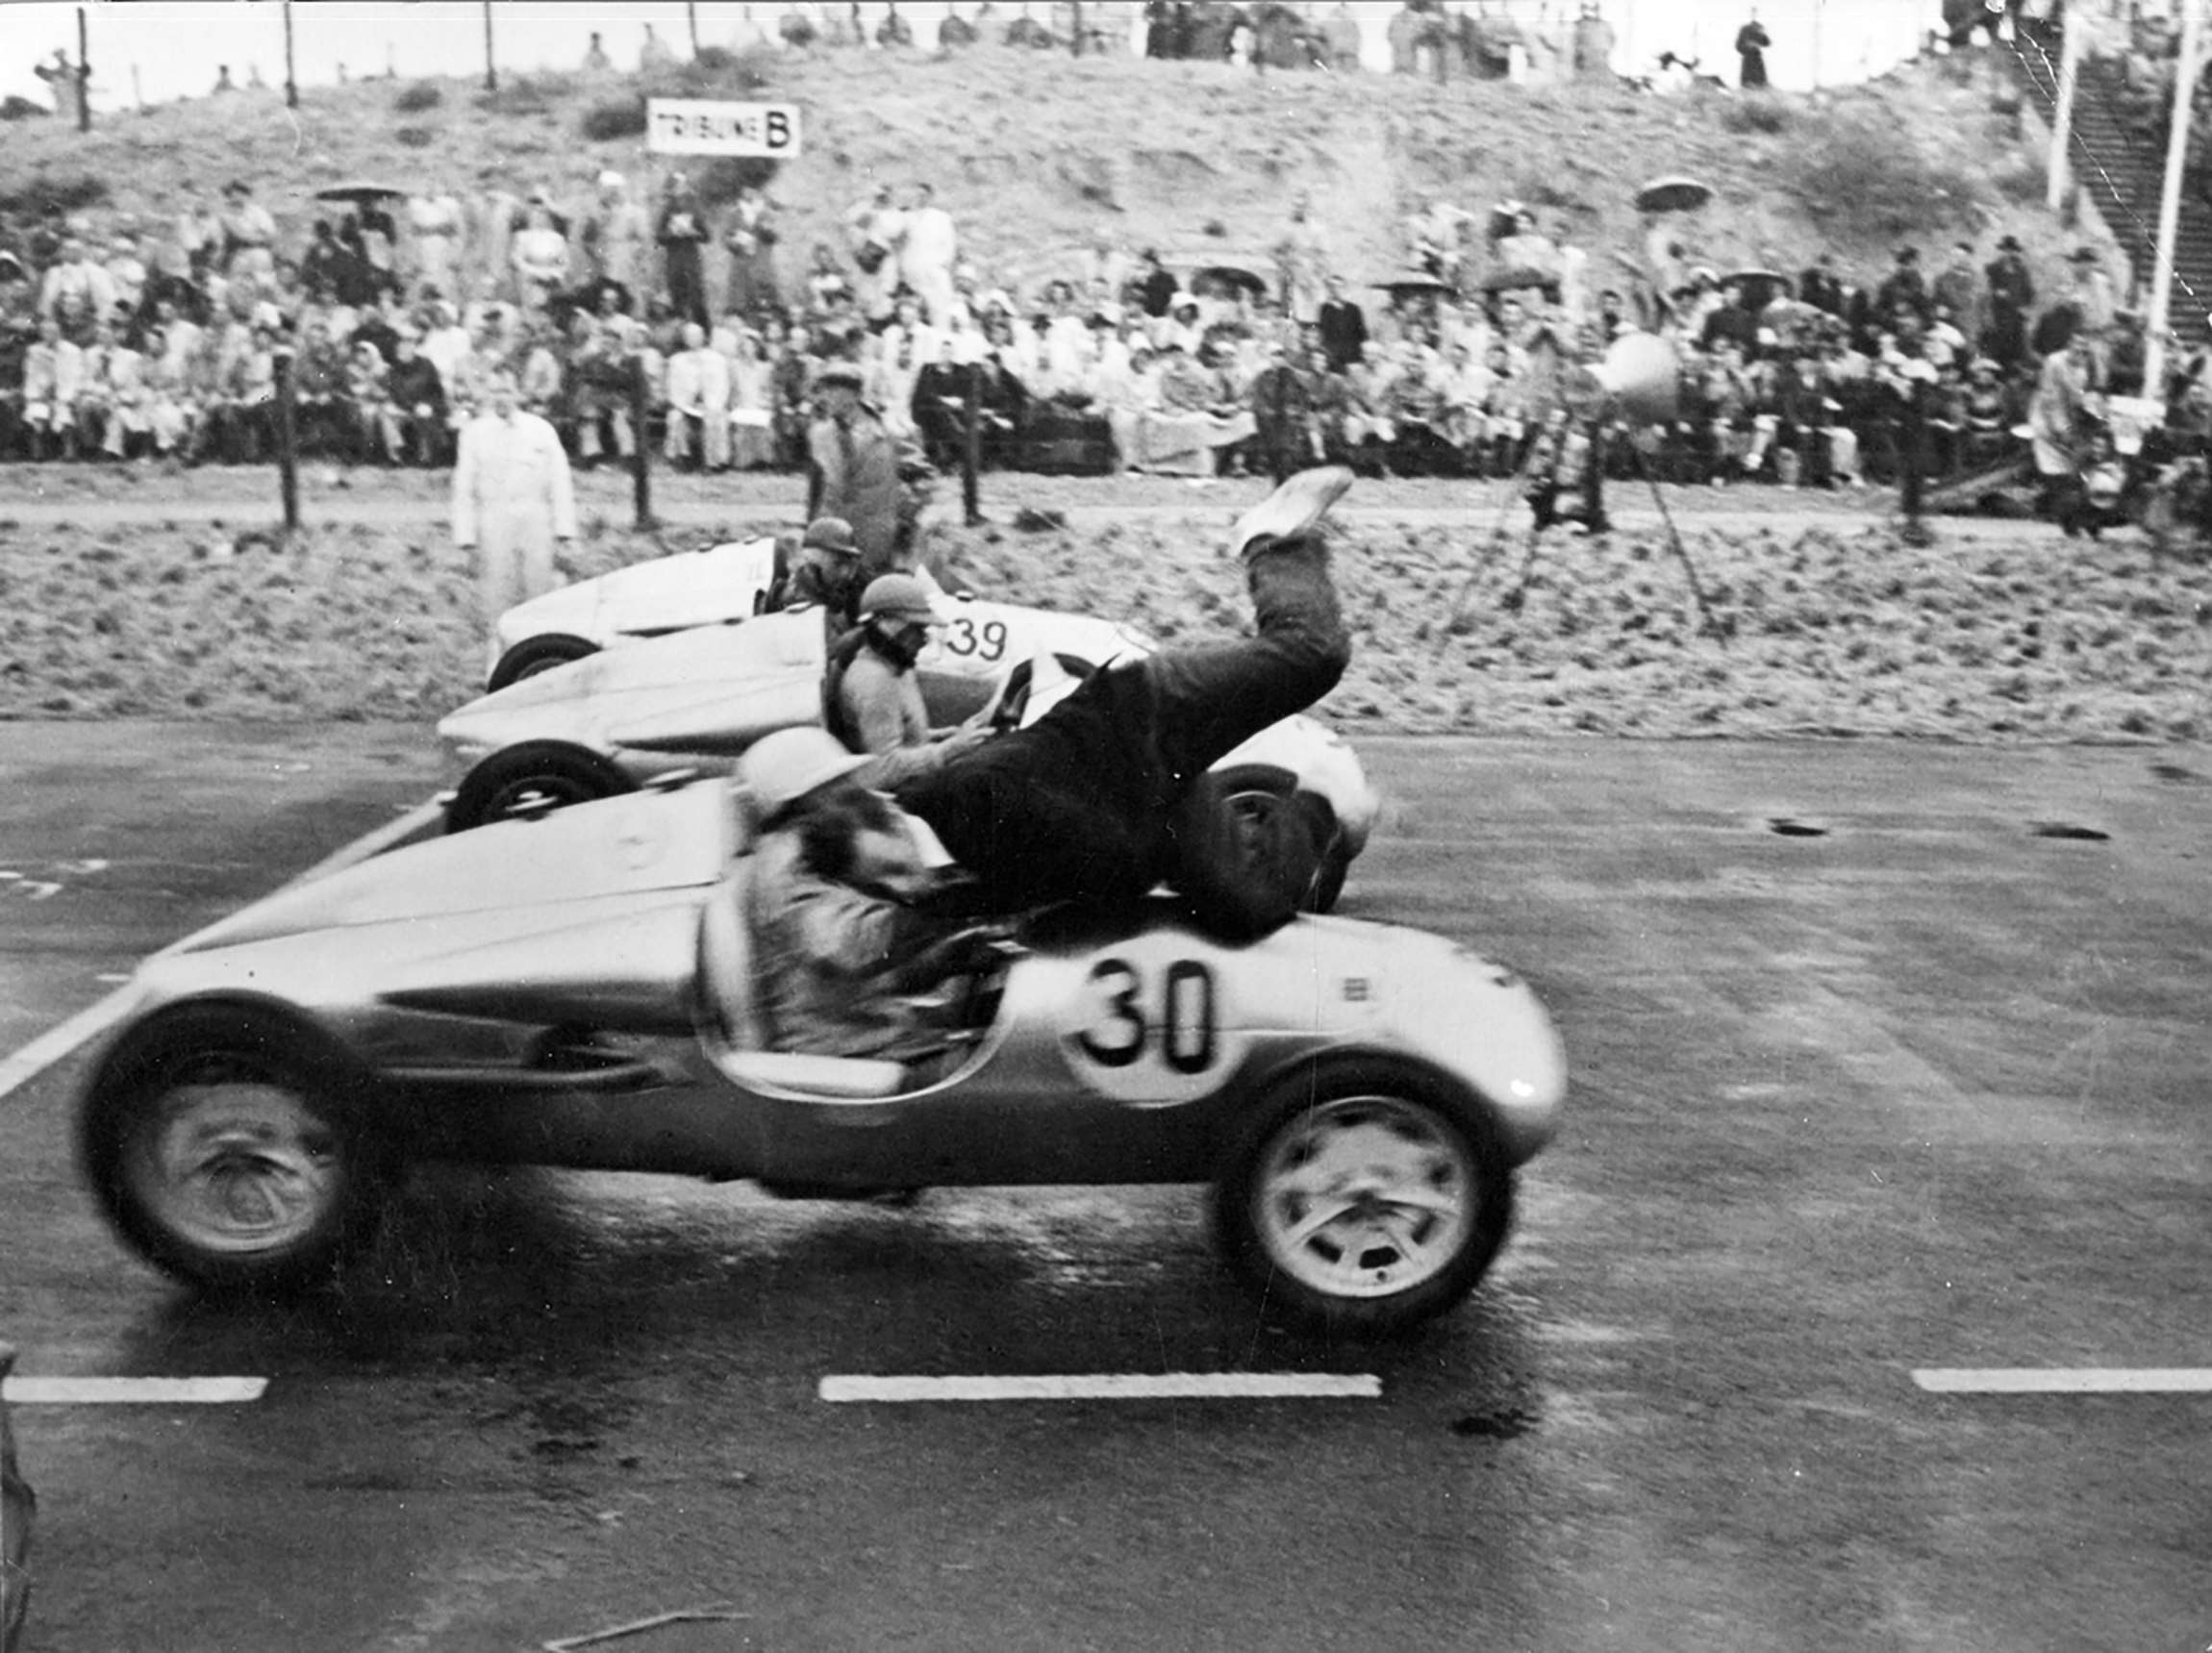 Zandvoort 1949 - Moss collecting John Habin’s mechanic on the startline, but still won the race